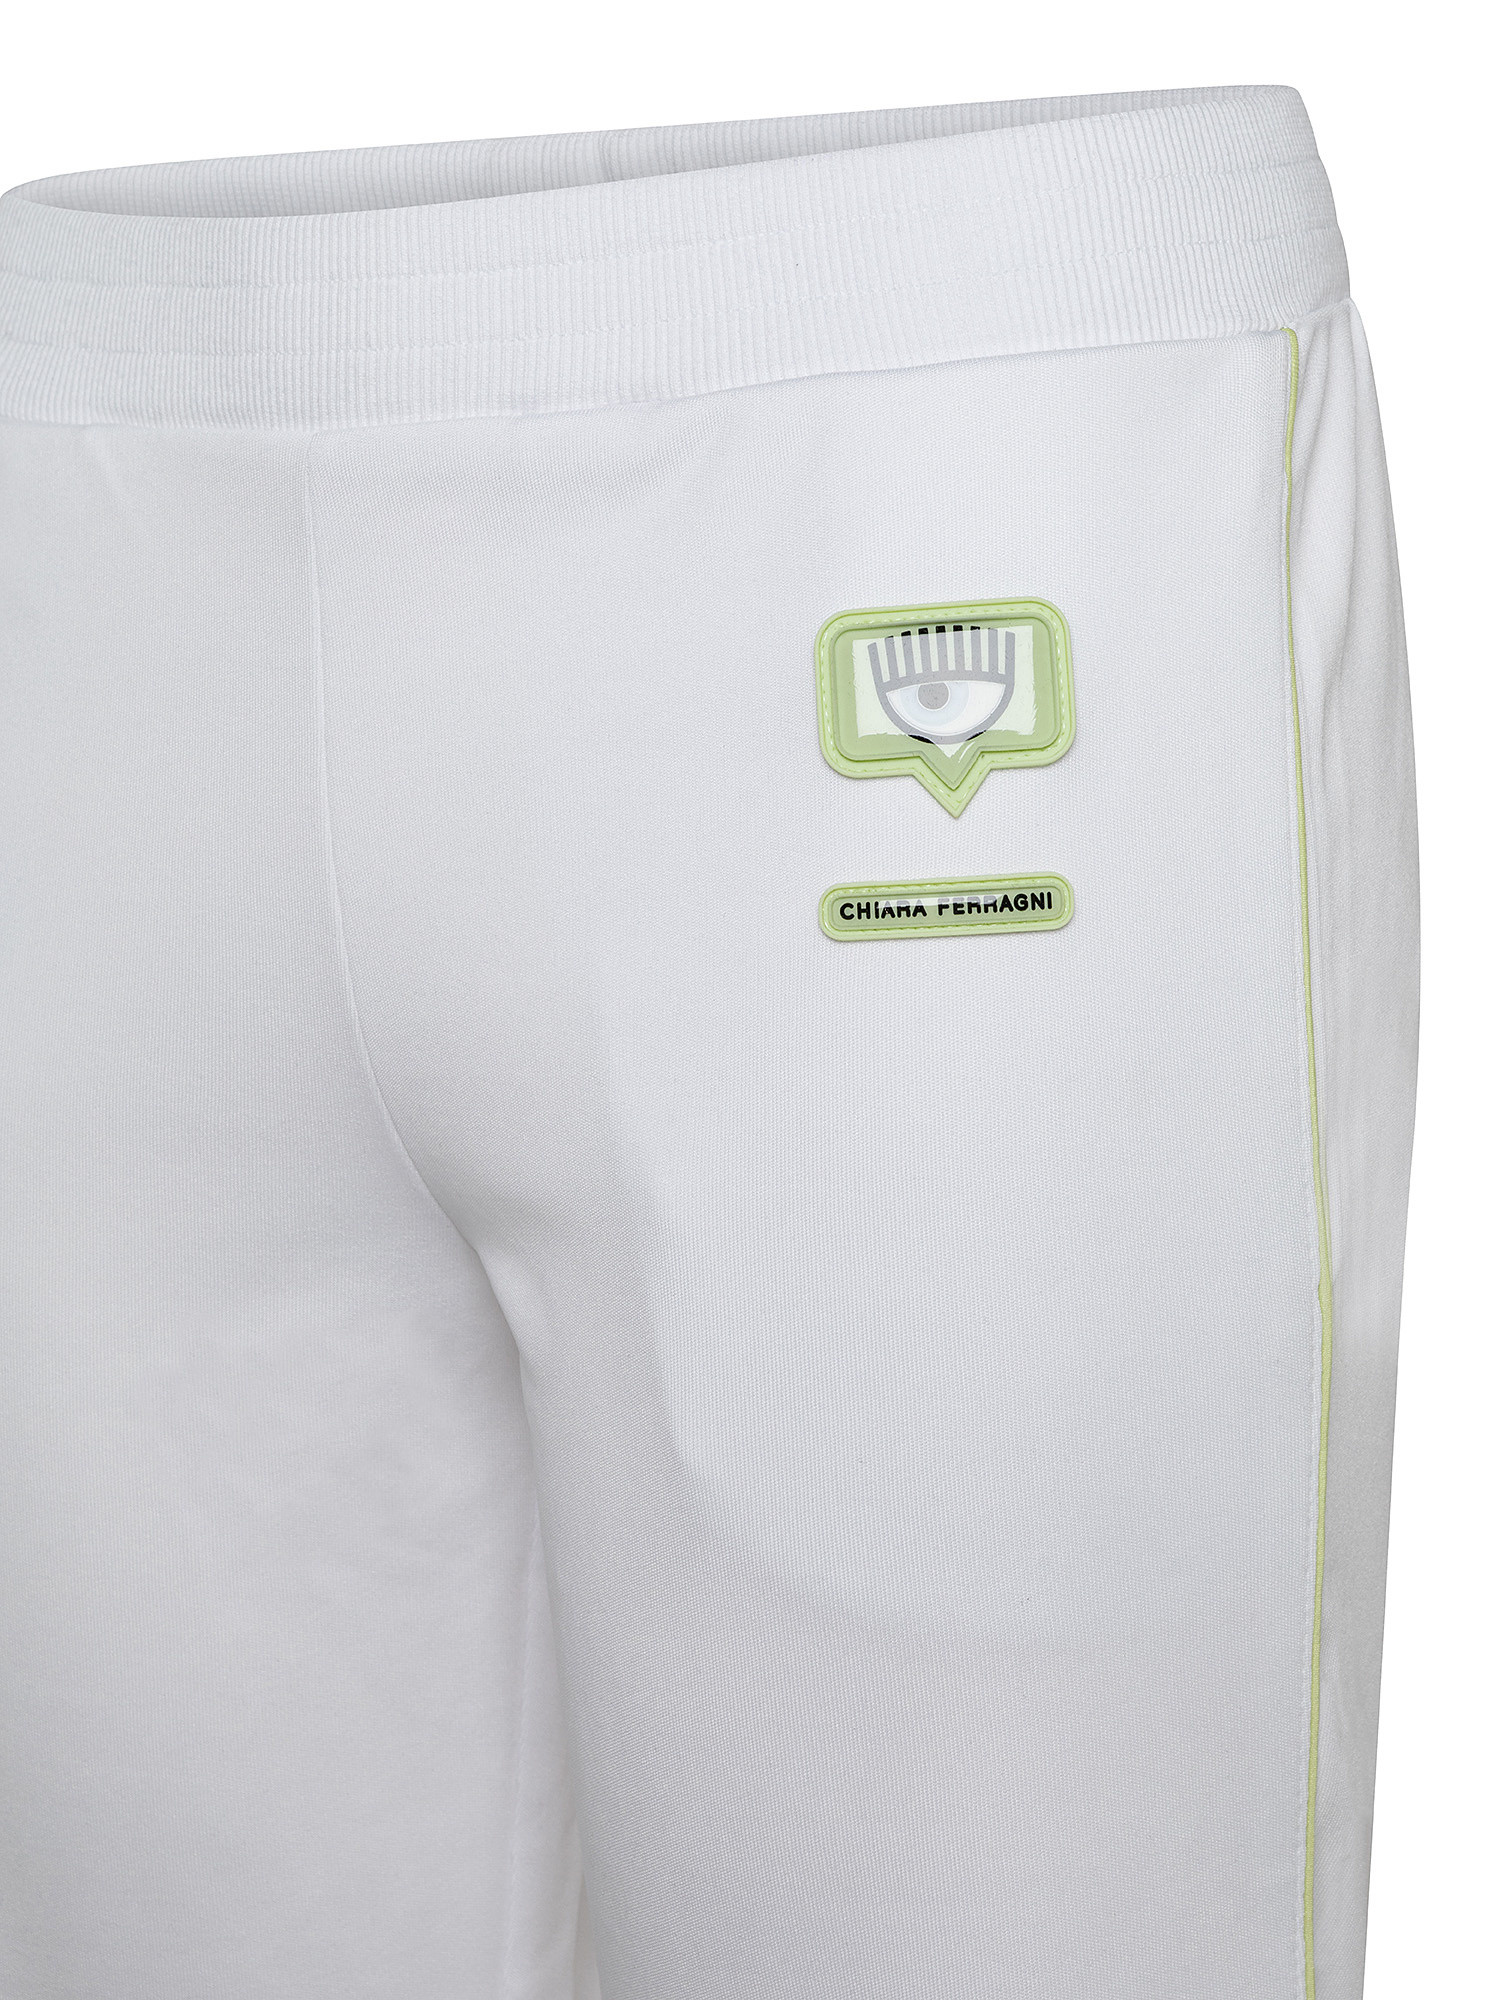 Pantaloni, Bianco, large image number 2